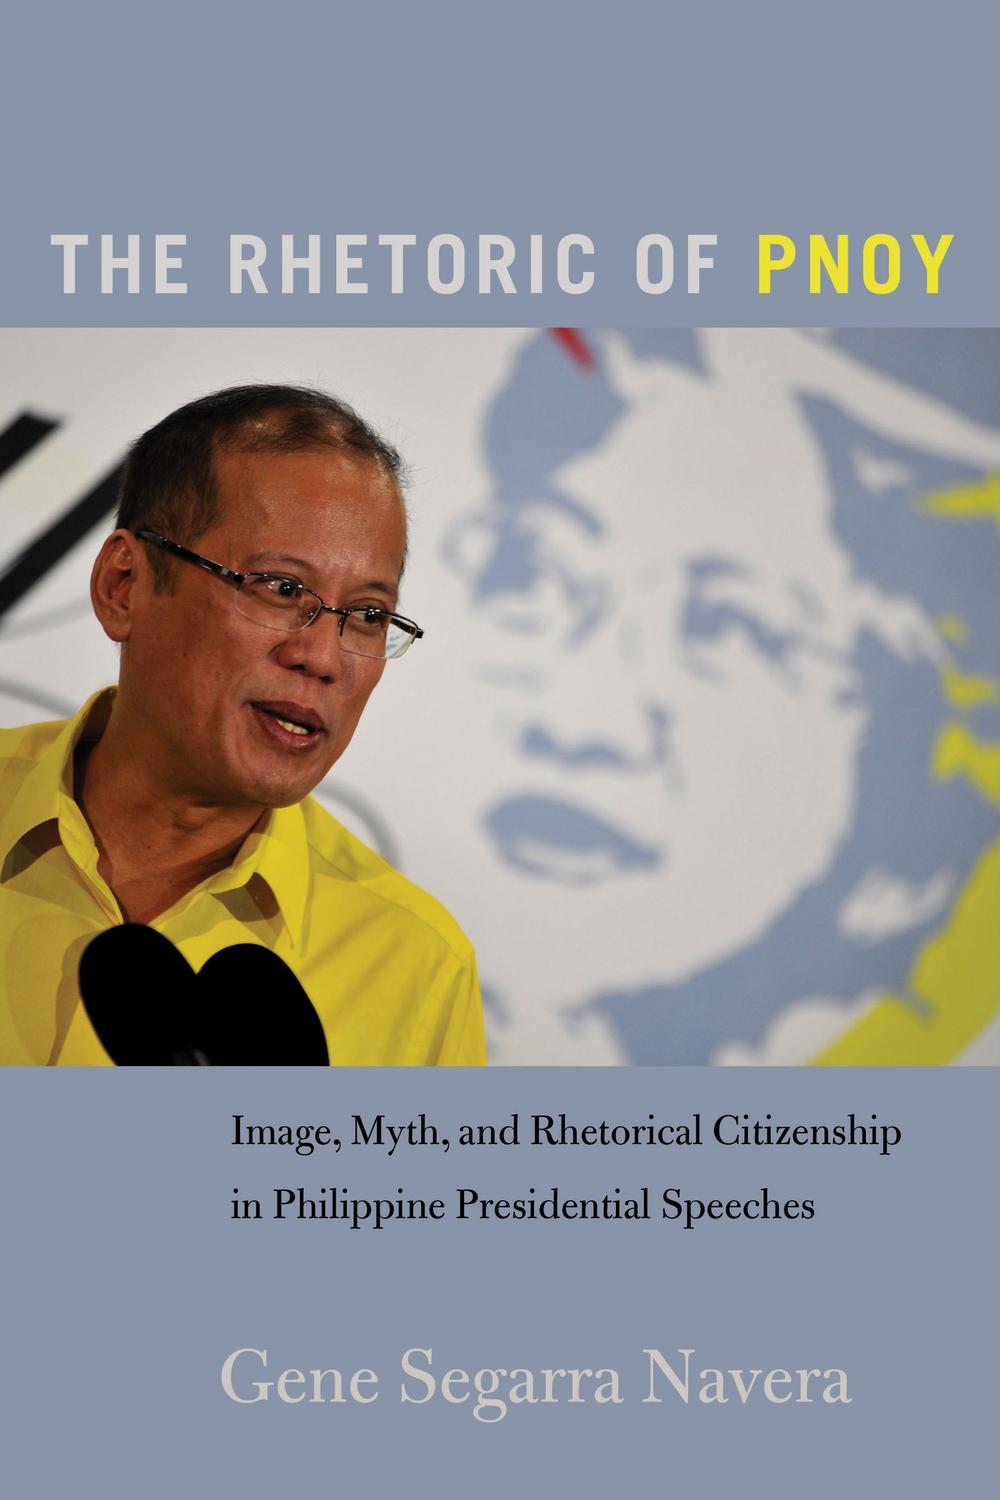 The rhetoric of PNoy image, myth and rhetorical citizenship in Philippine presidential speeches